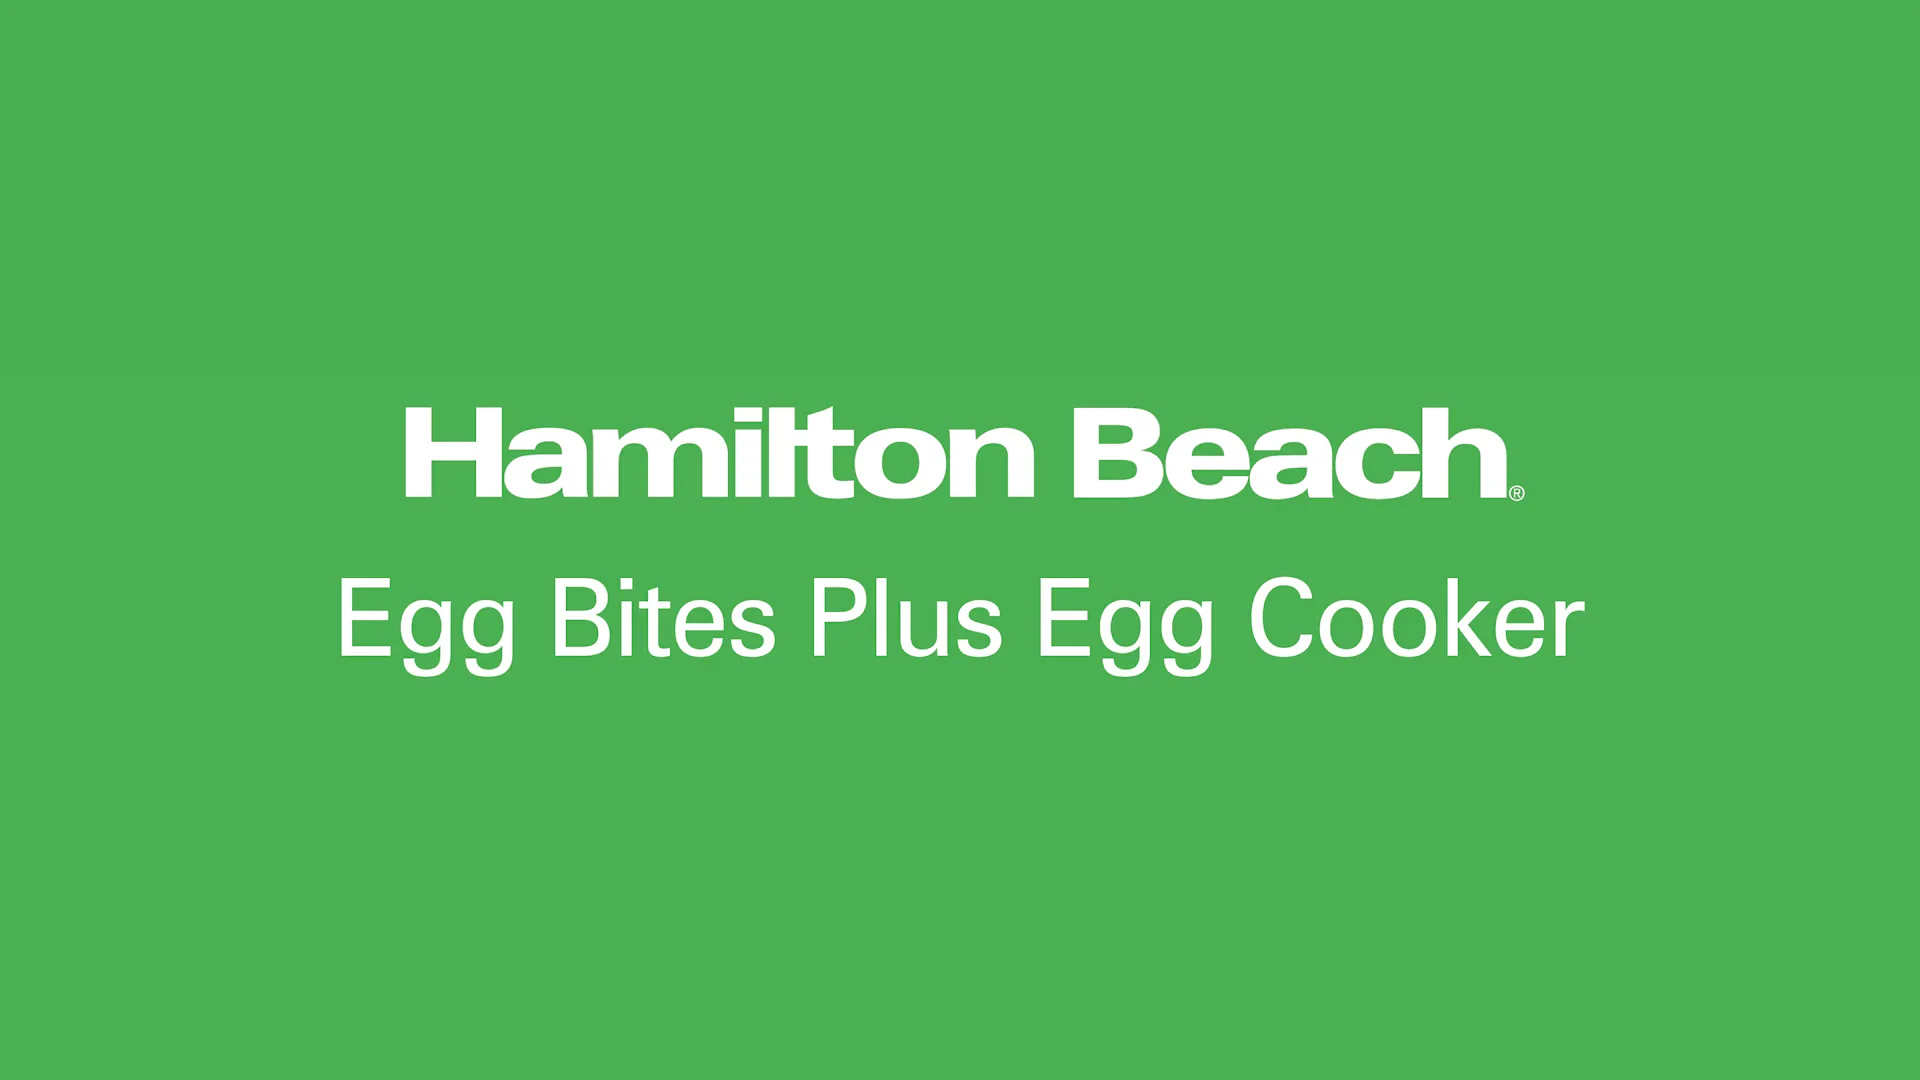 Hamilton Beach Egg Bites Plus & Reviews